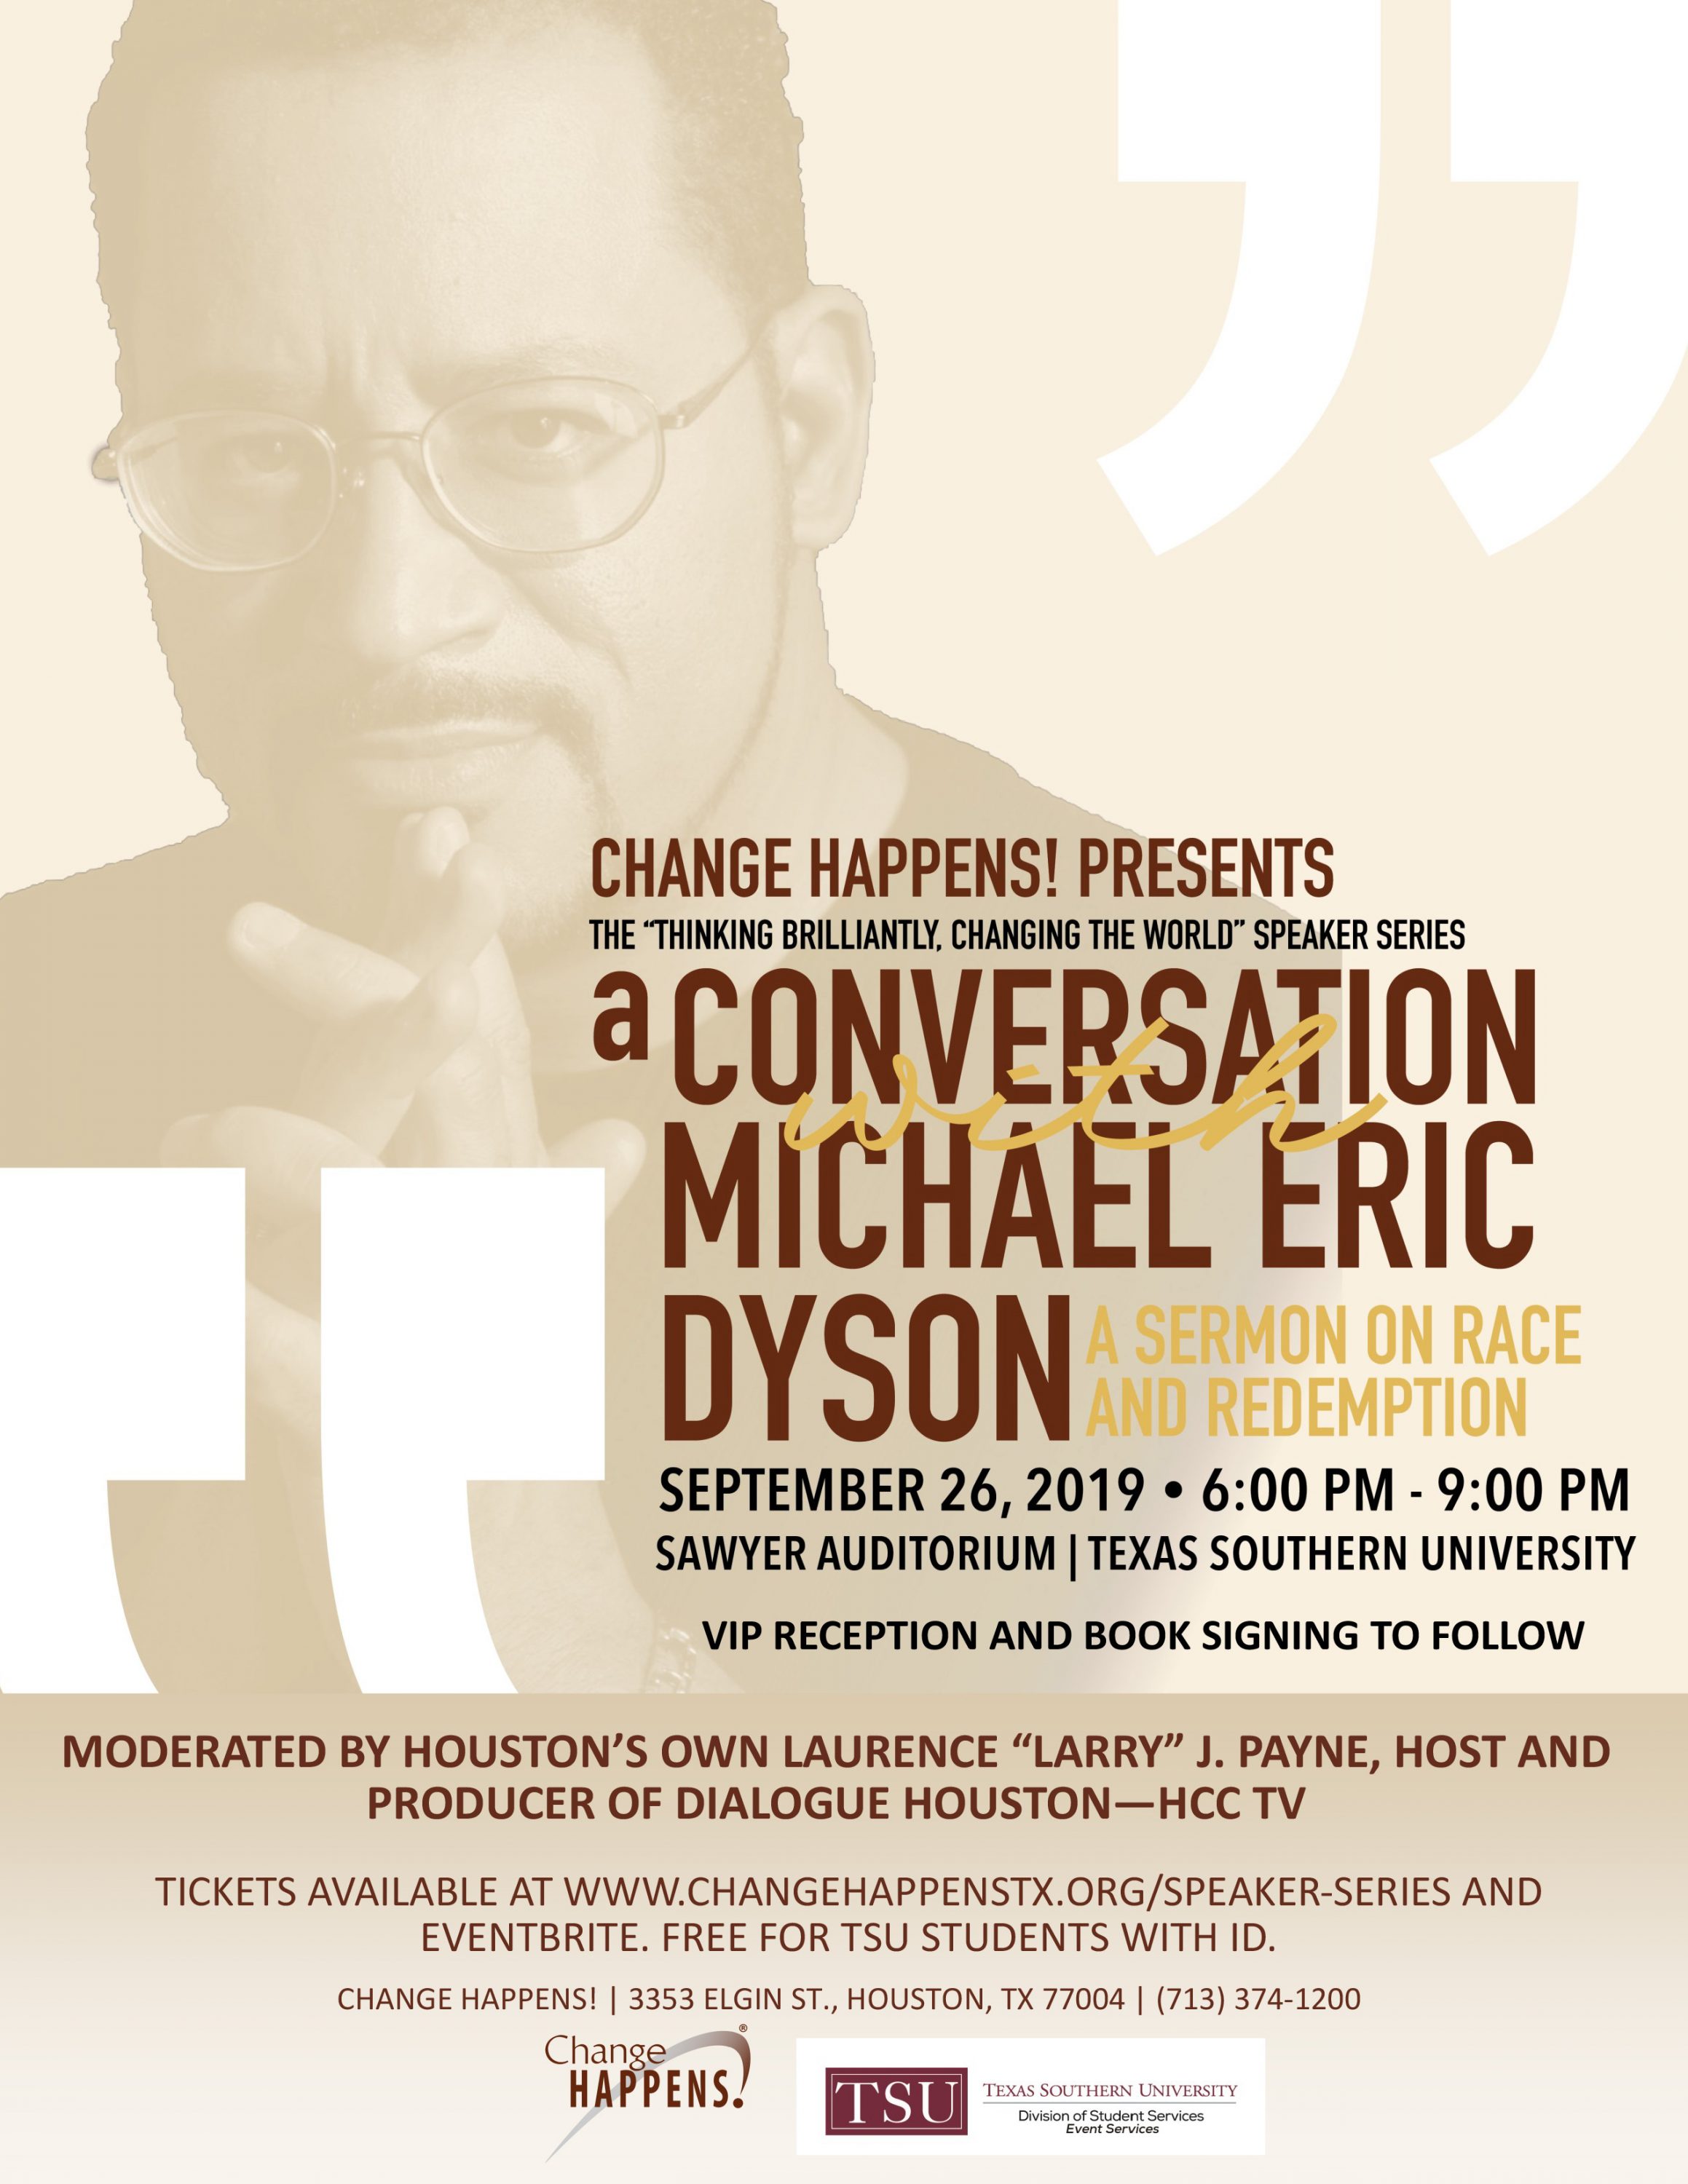 Change Happens! Presents A Conversation with Michael Eric Dyson | September 26, 2019